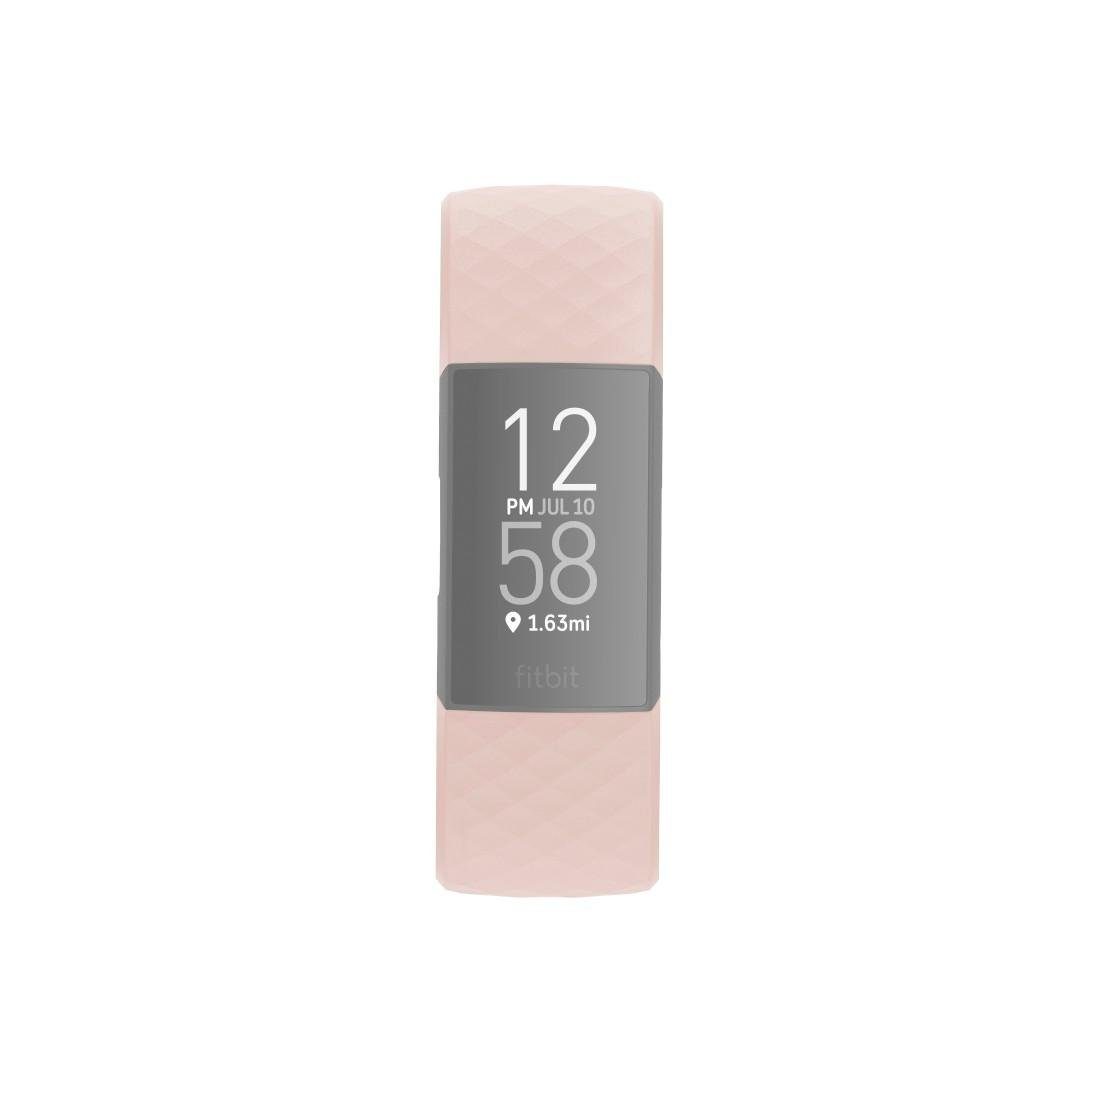 Hama Smartwatch-Armband Ersatzarmband für Fitbit 22mm, 3 und rosé 19,9 Charge Charge 4, Fitbit cm